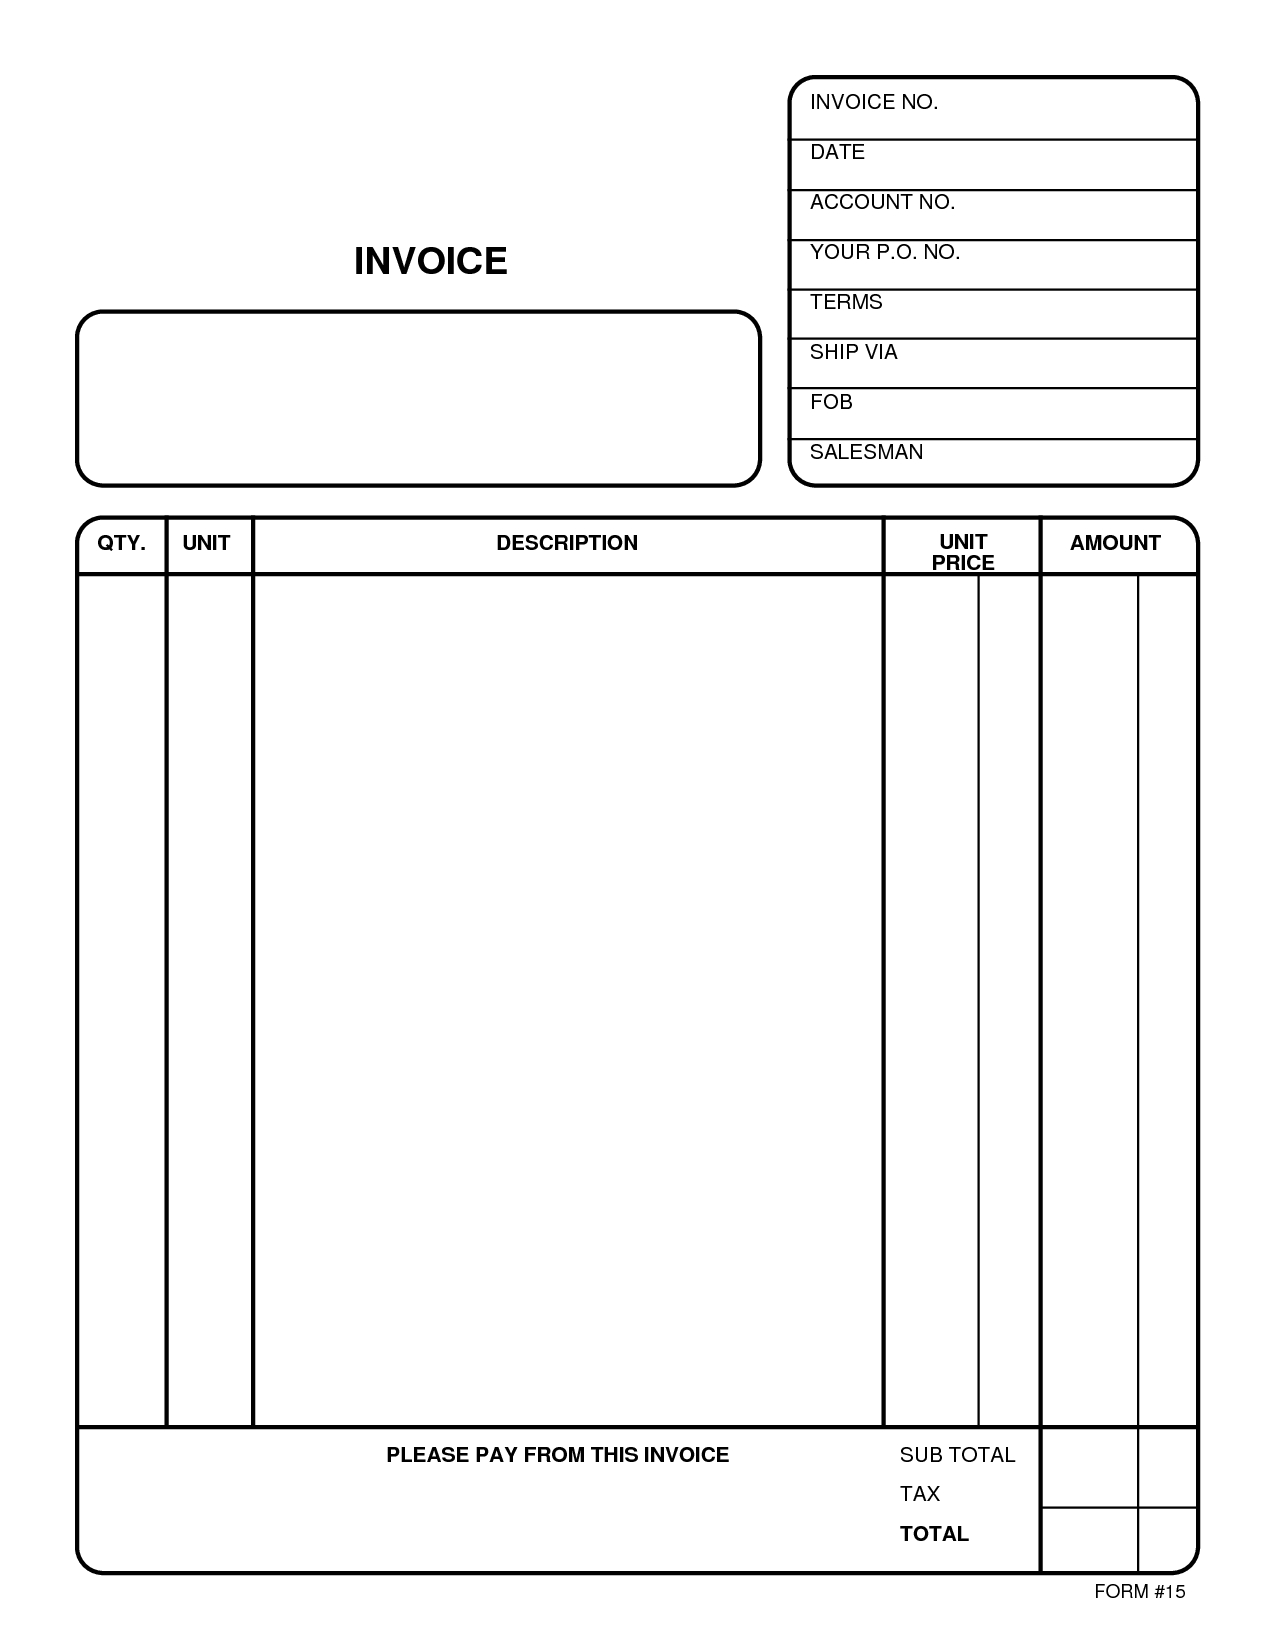 free invoice online pdf invoice creator uff1afree verypdf create invoice free online